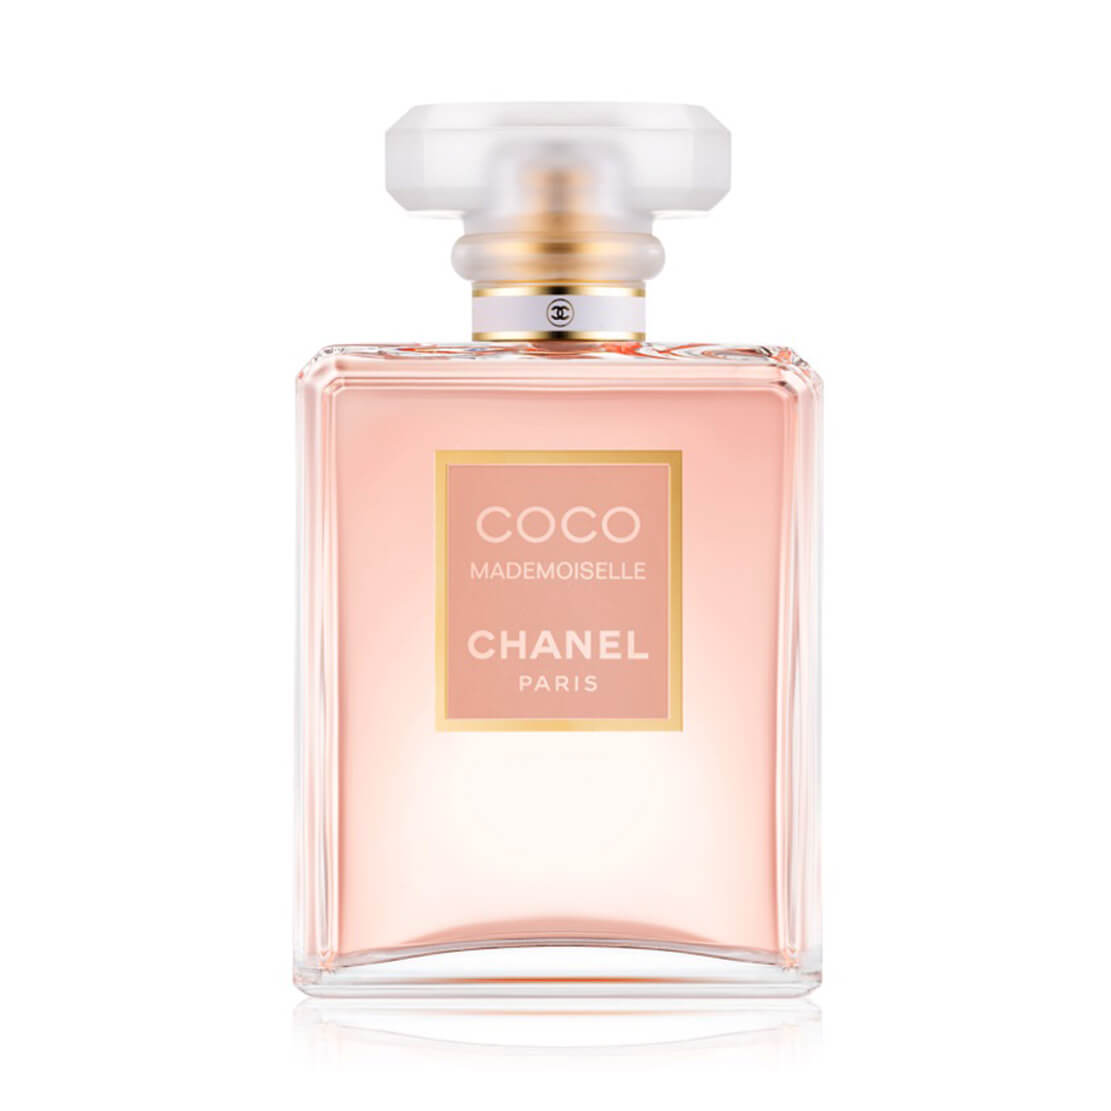 fragrances similar to coco mademoiselle